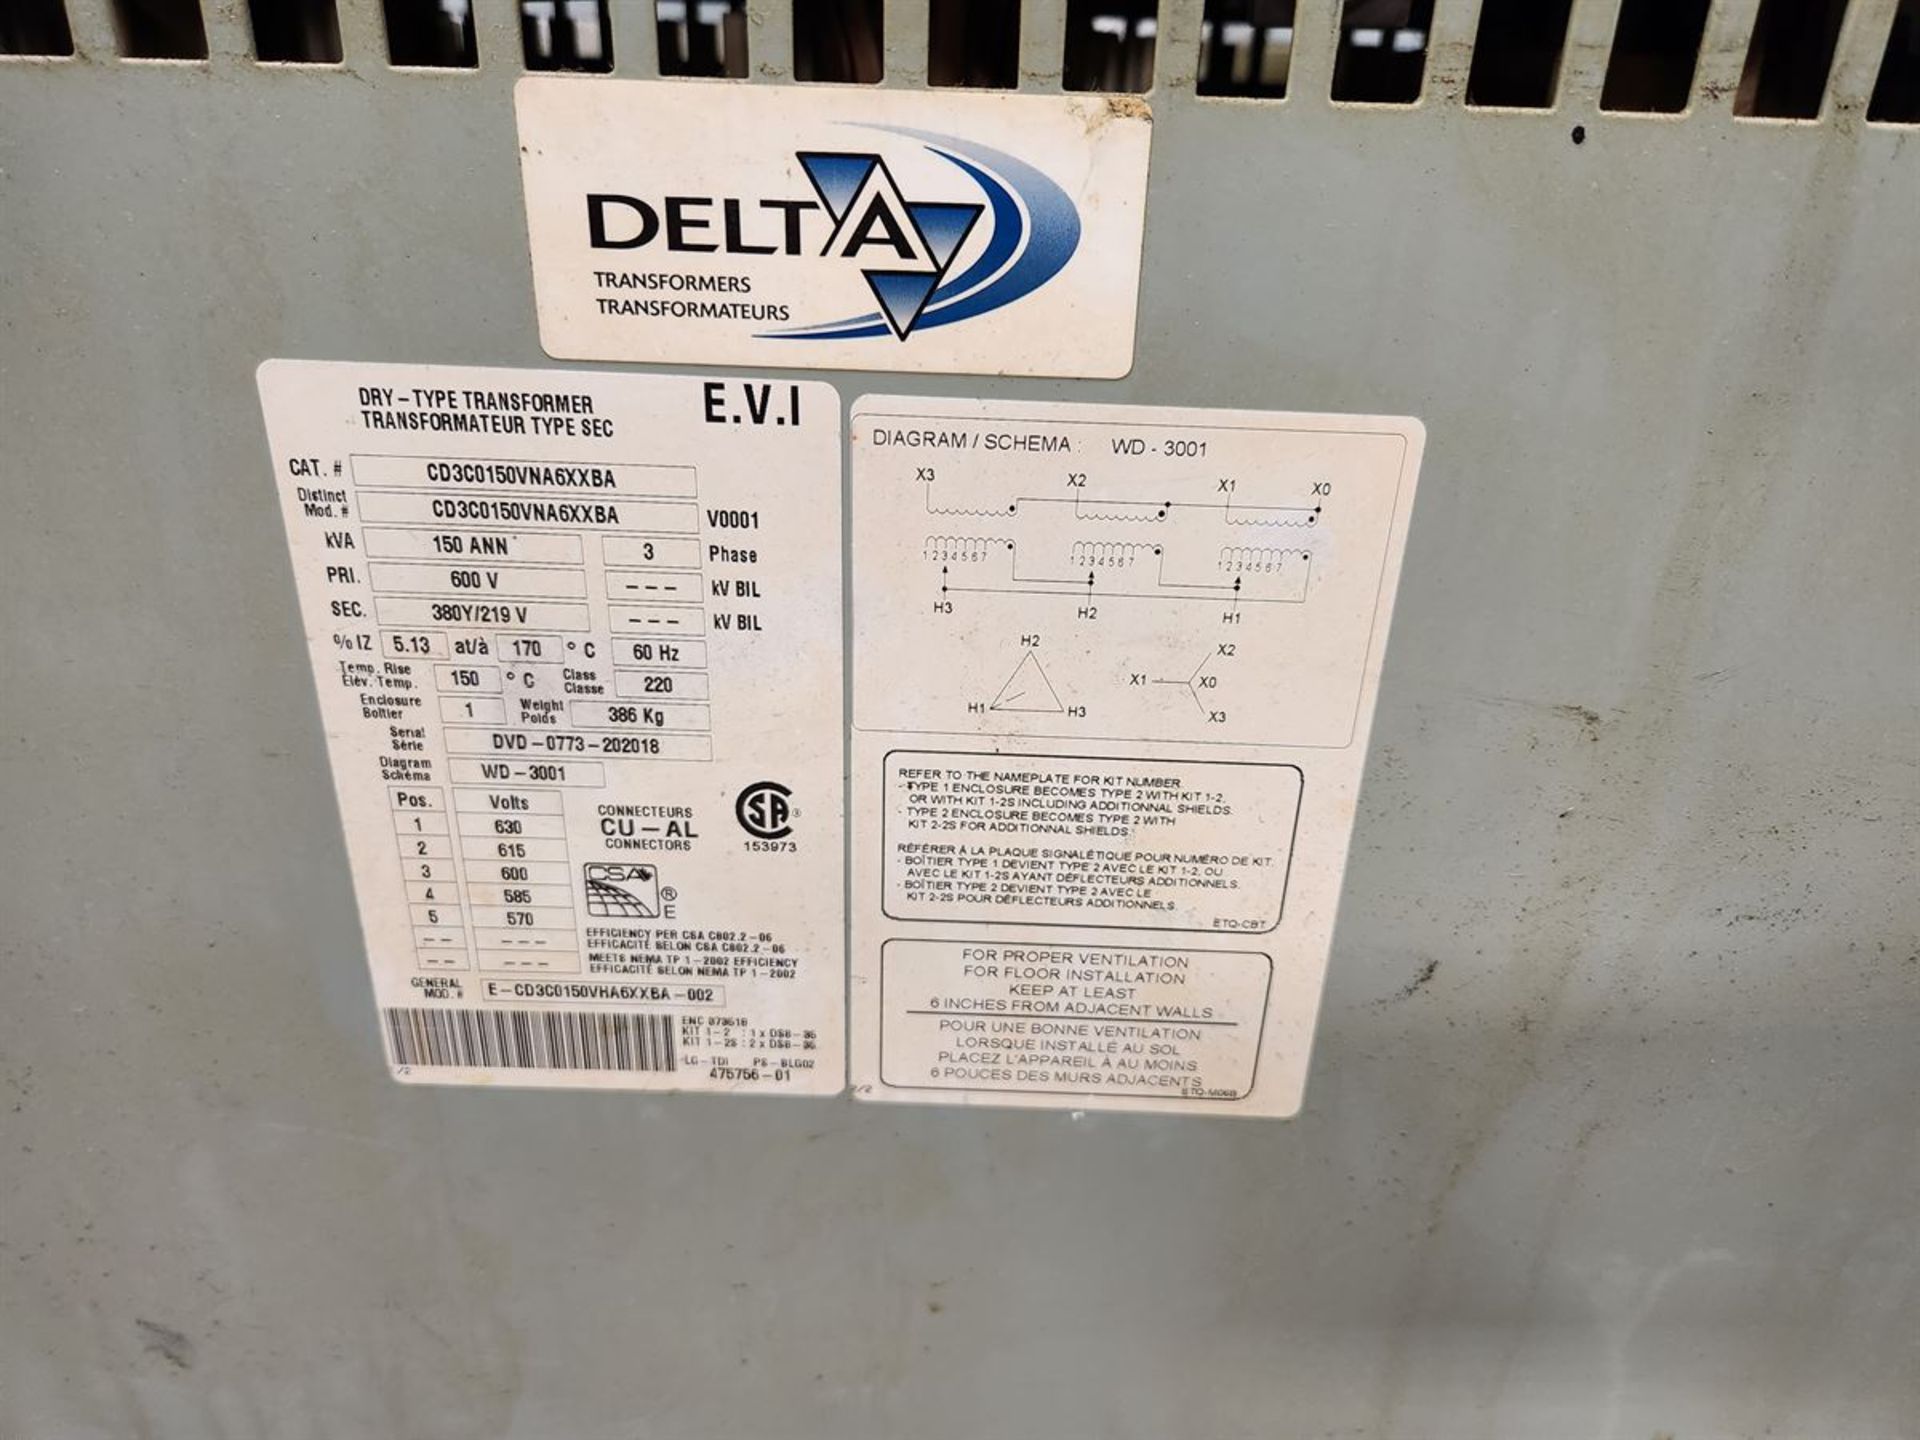 Delta Dry-Type Transformer, 3 Phase, 600V, KVA 150 ANN, CD3C0150VNA6XXBA, s/n DVD-0773-202018 - Image 2 of 2